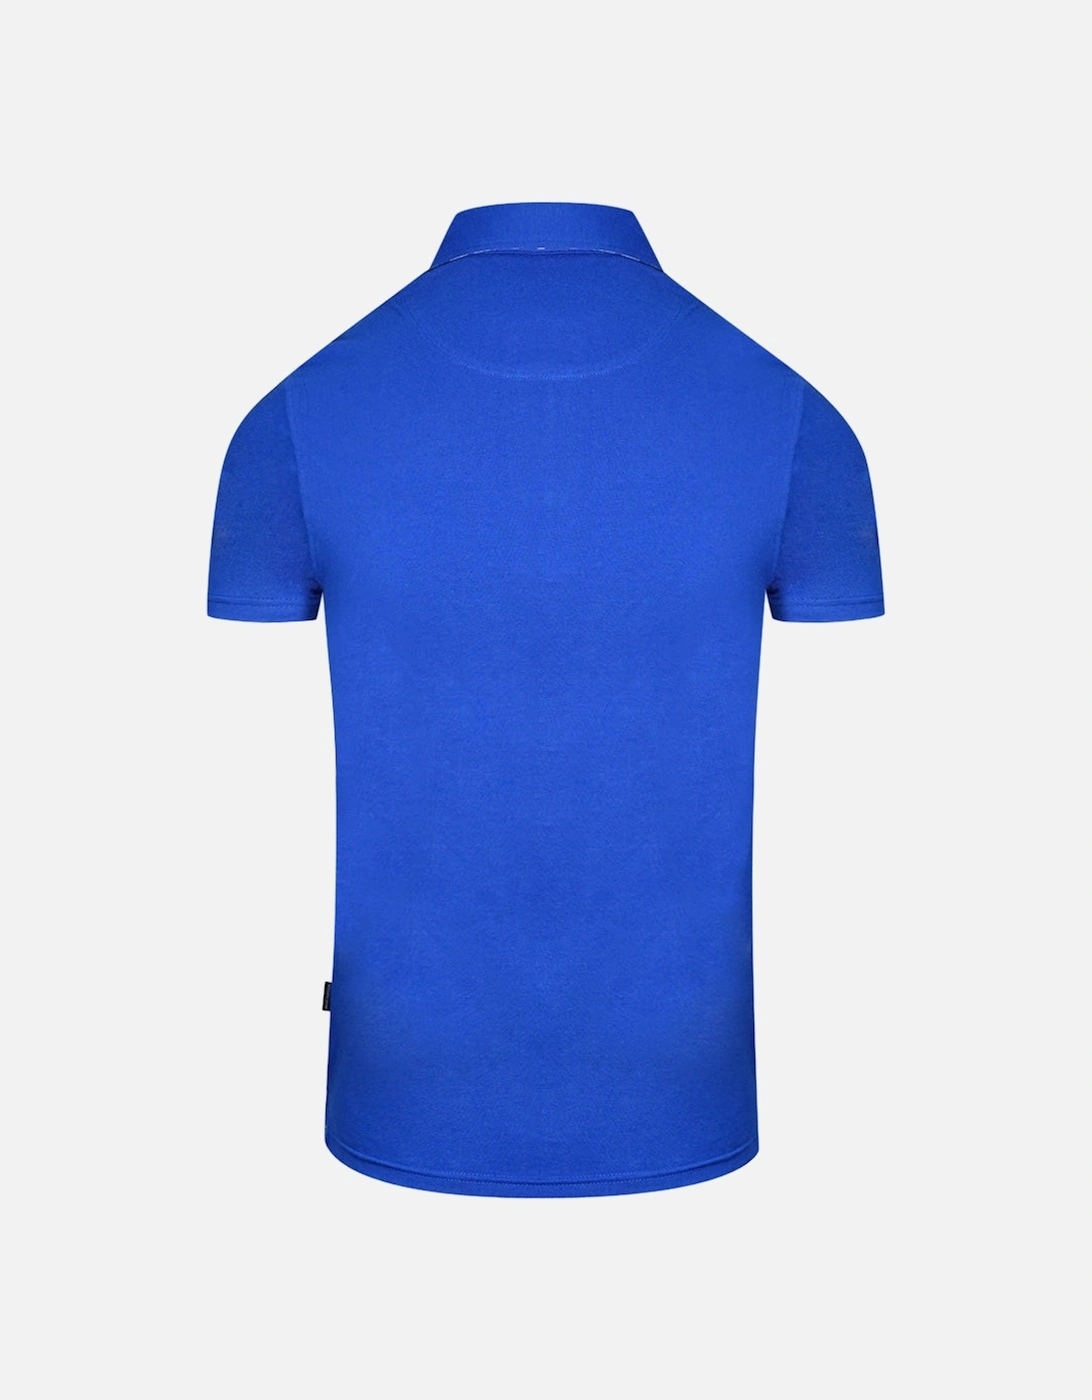 London Bold Logo Blue Polo Shirt